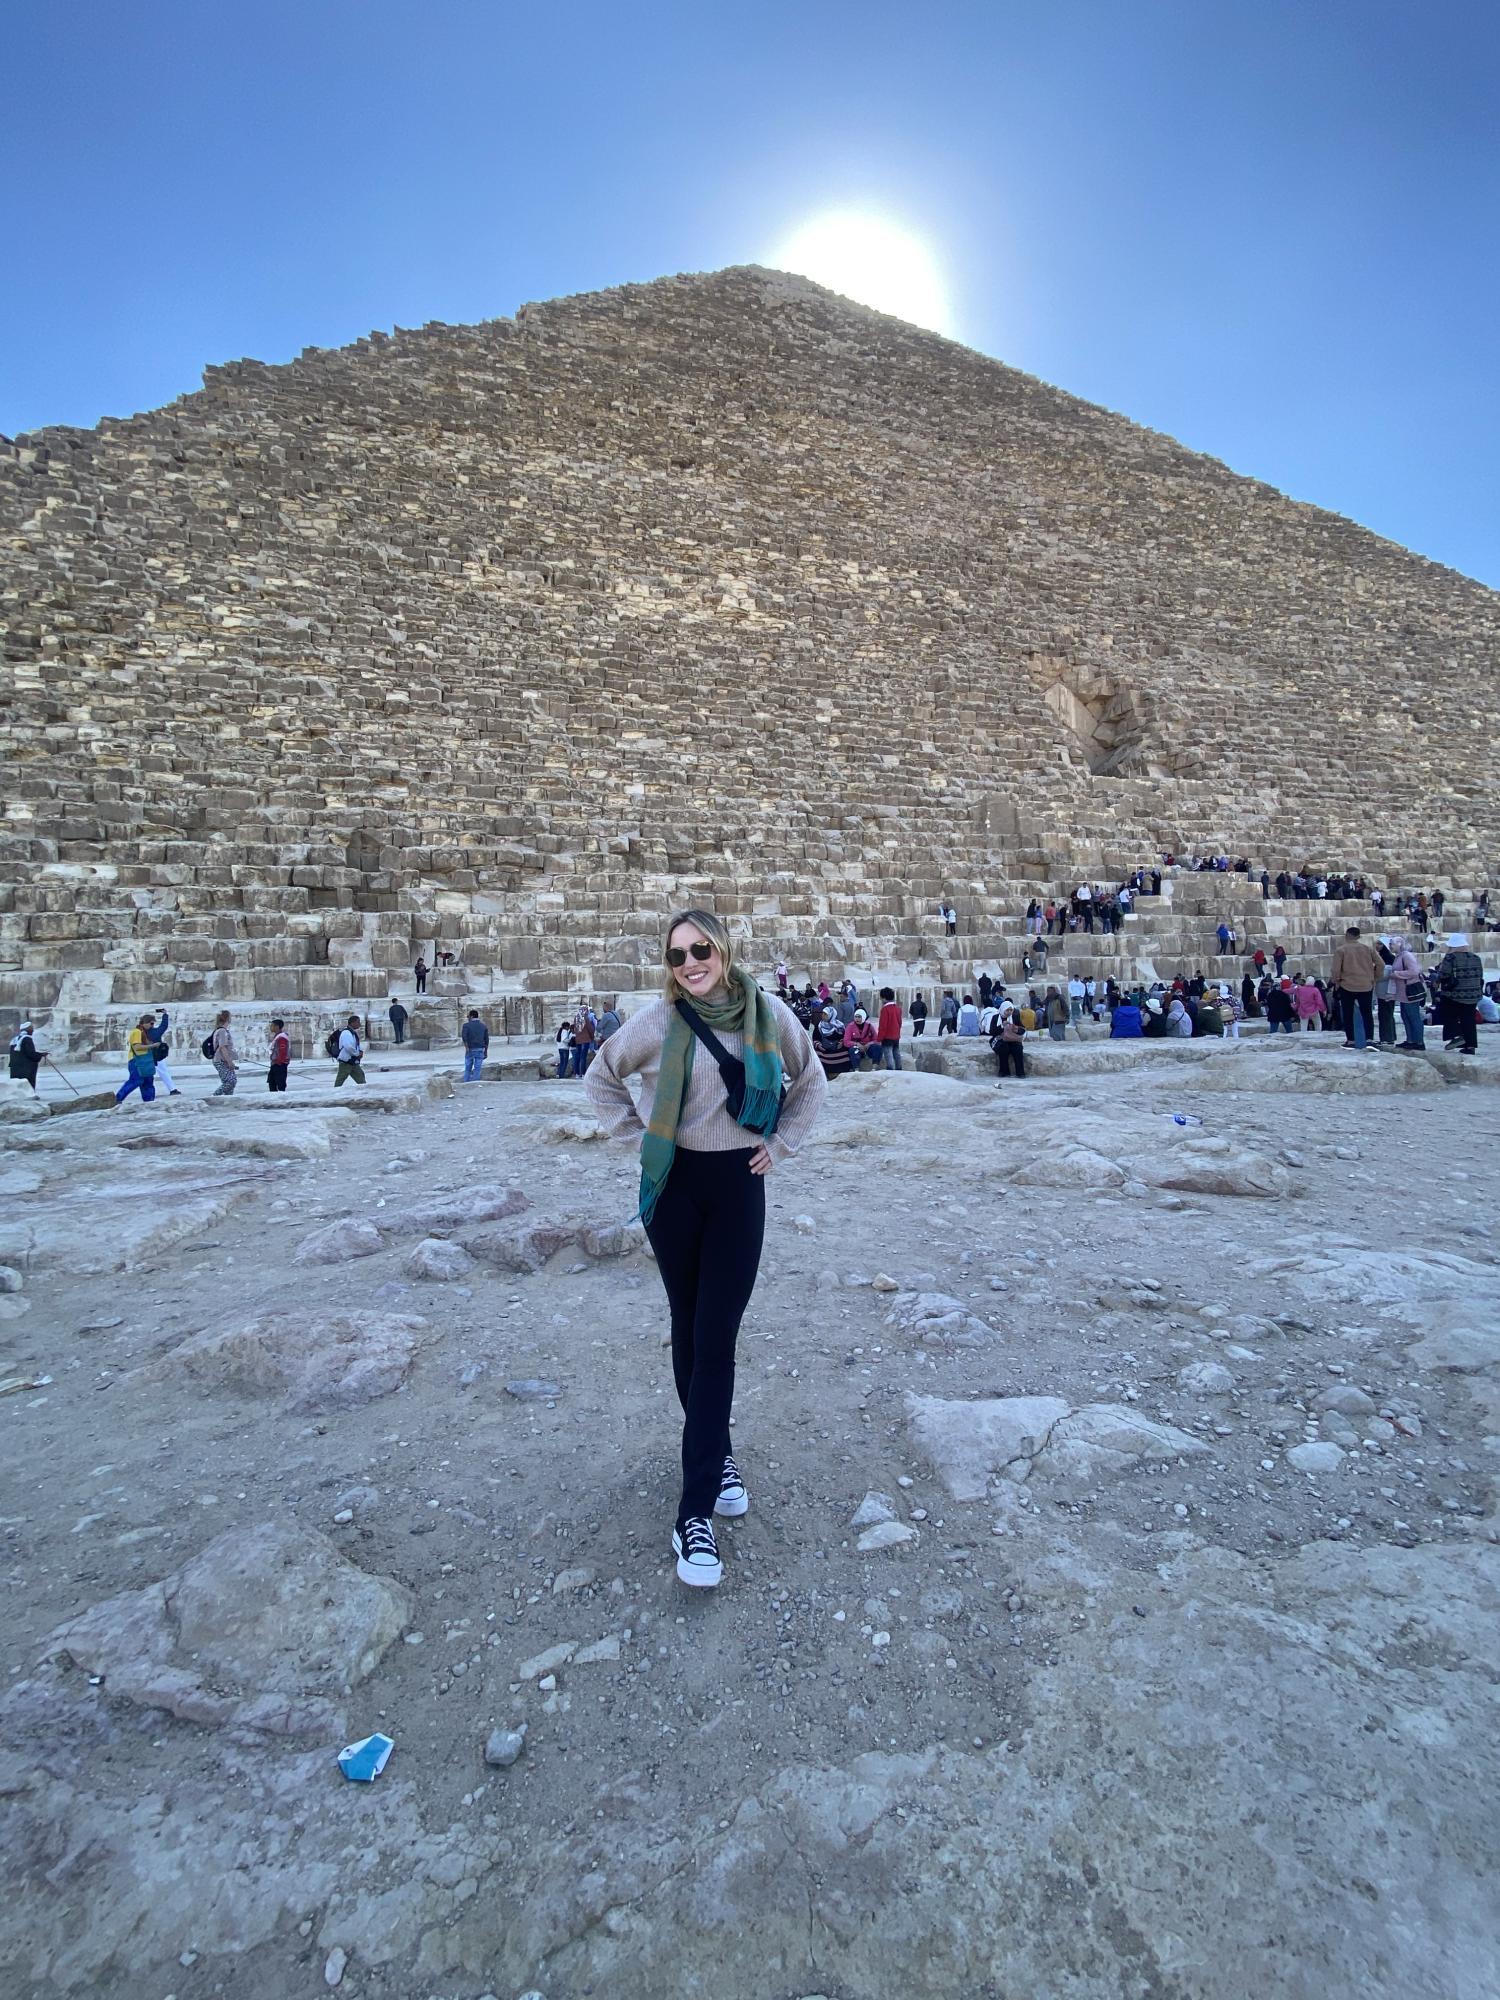 Lillian next to pyramid